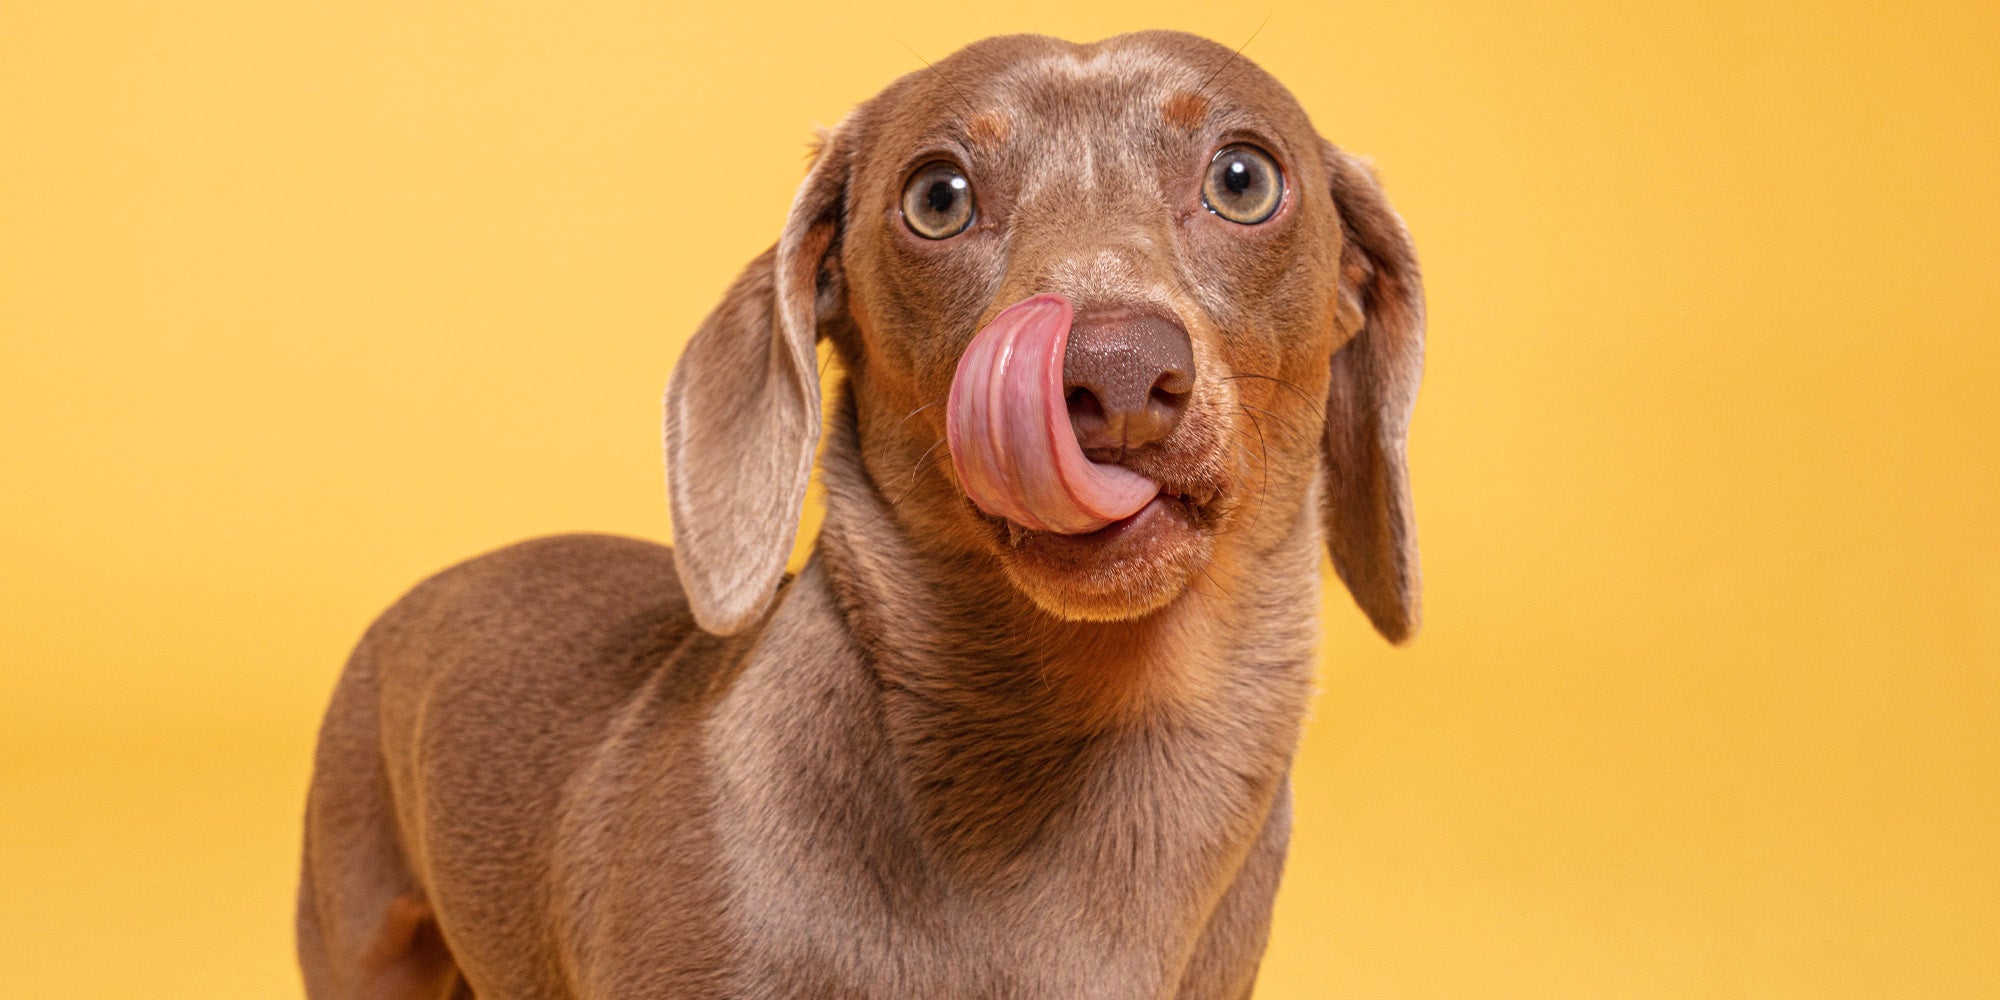 Short-haired golden brown daschund dog, licking its lips, against a pale orange background